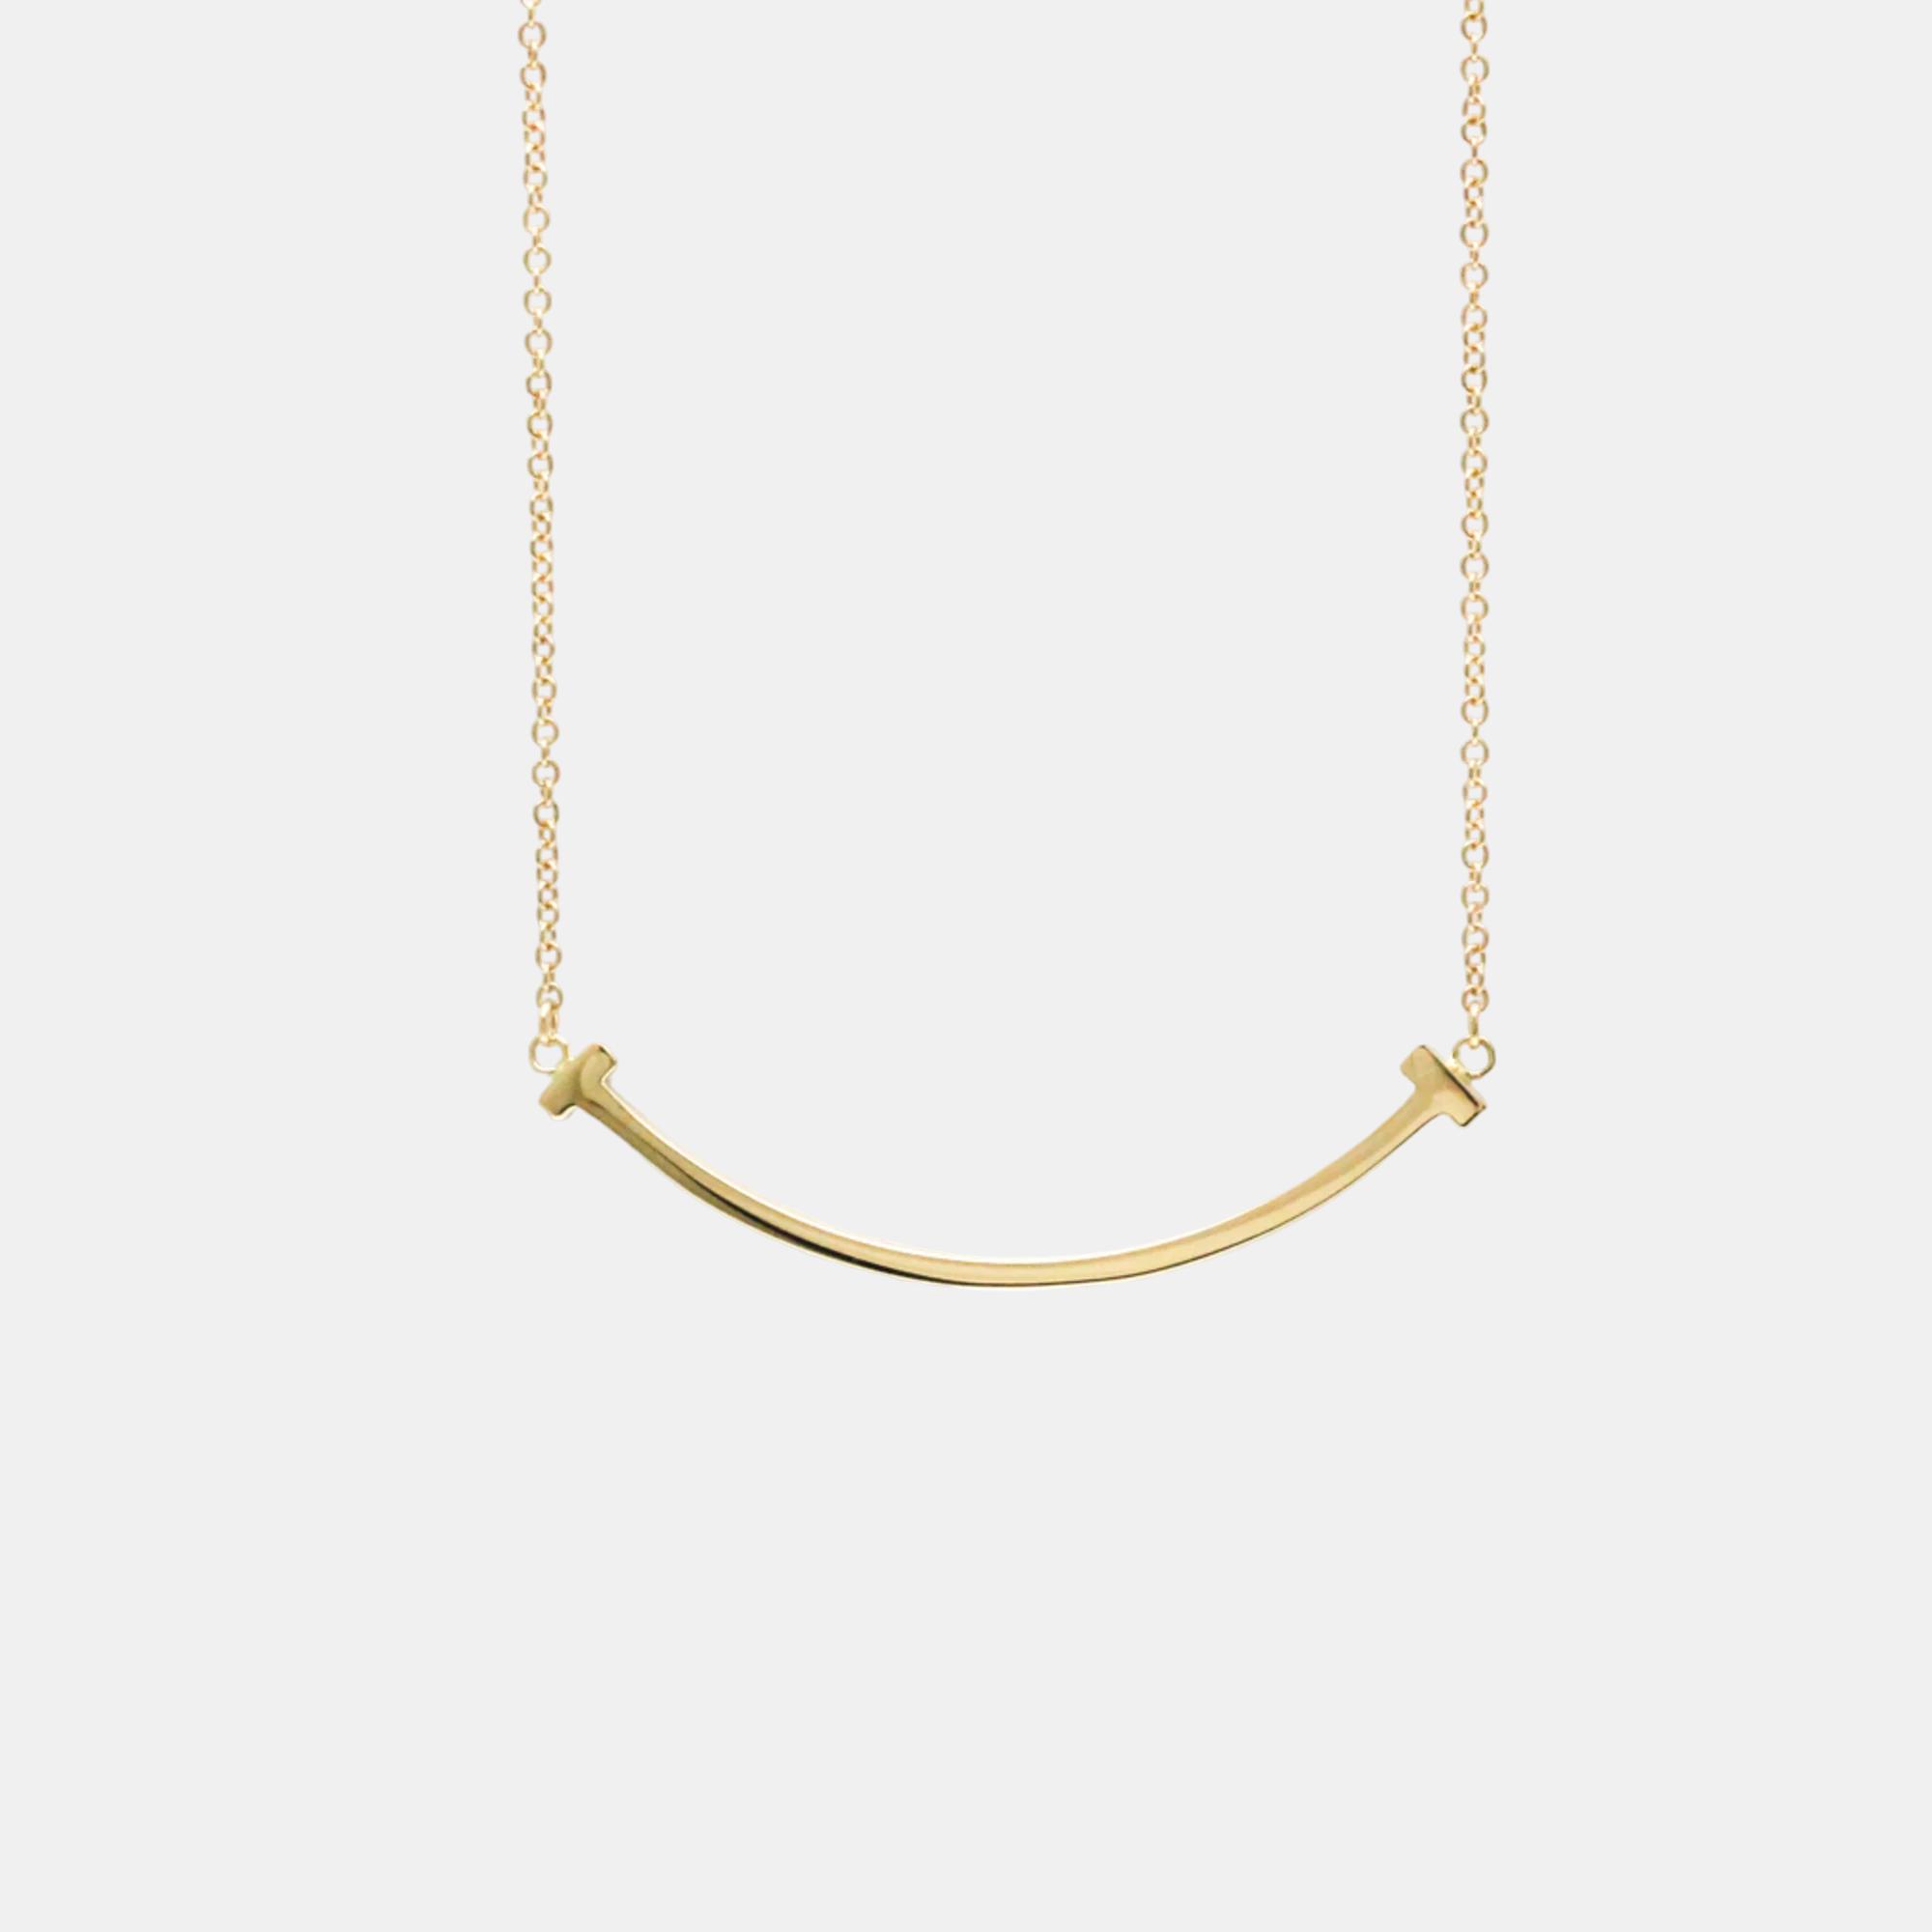 Tiffany & co. 18k rose gold smile pendant necklace